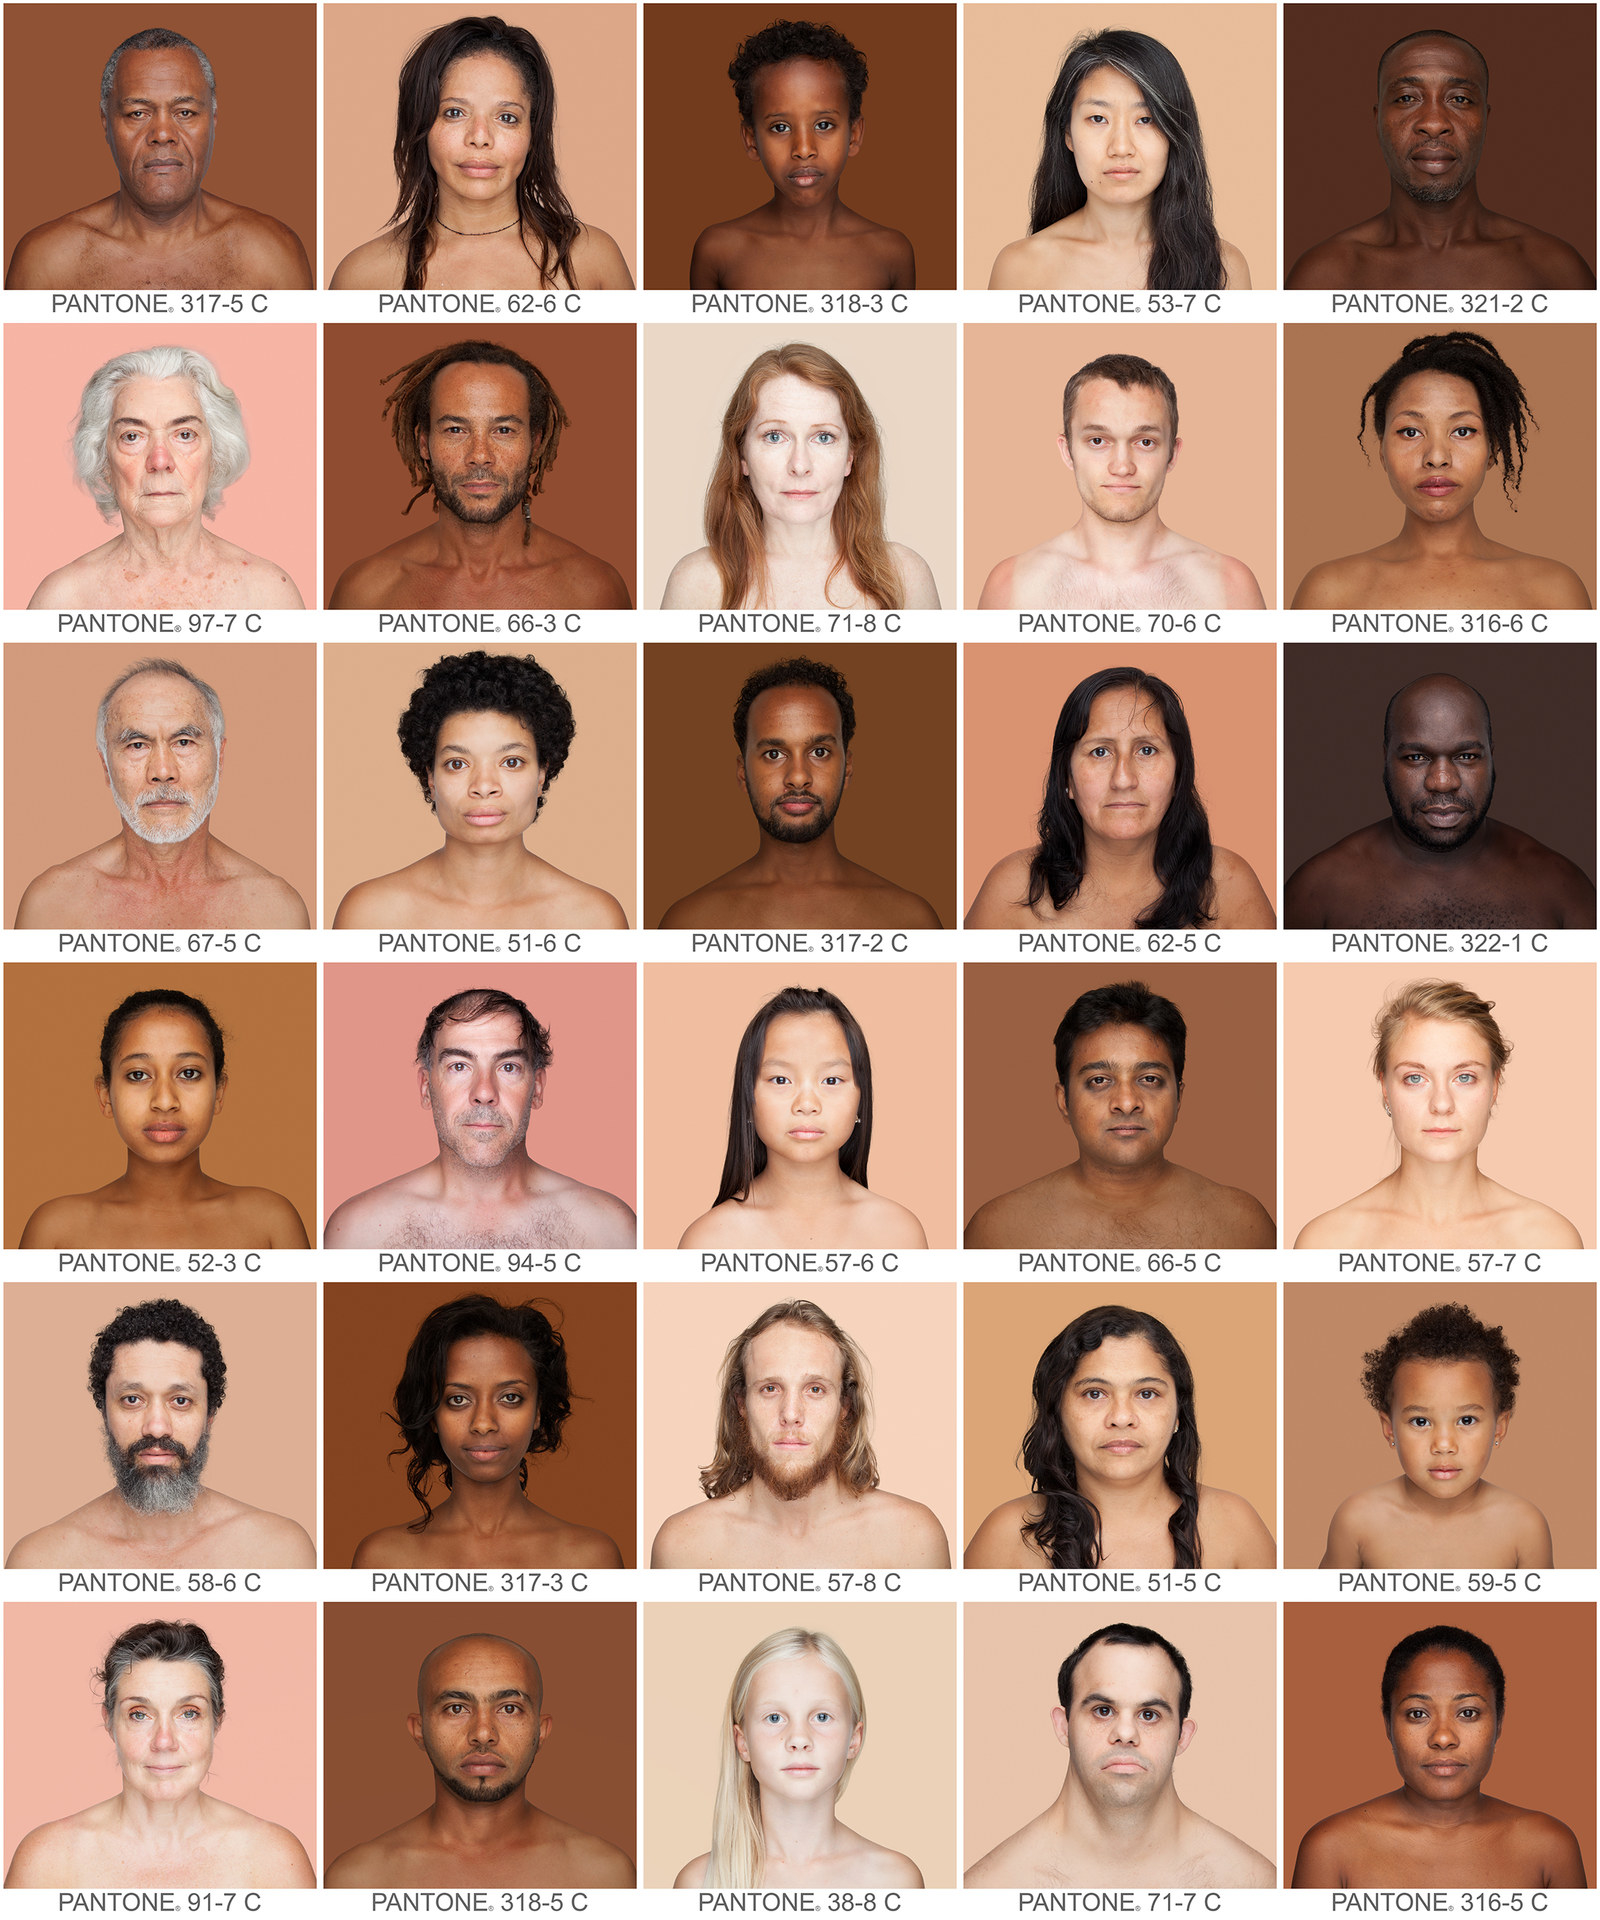 Human types. Цвет кожи. Цвет кожи человека. Оттенки кожи человека. Оттенки кожи разных рас.